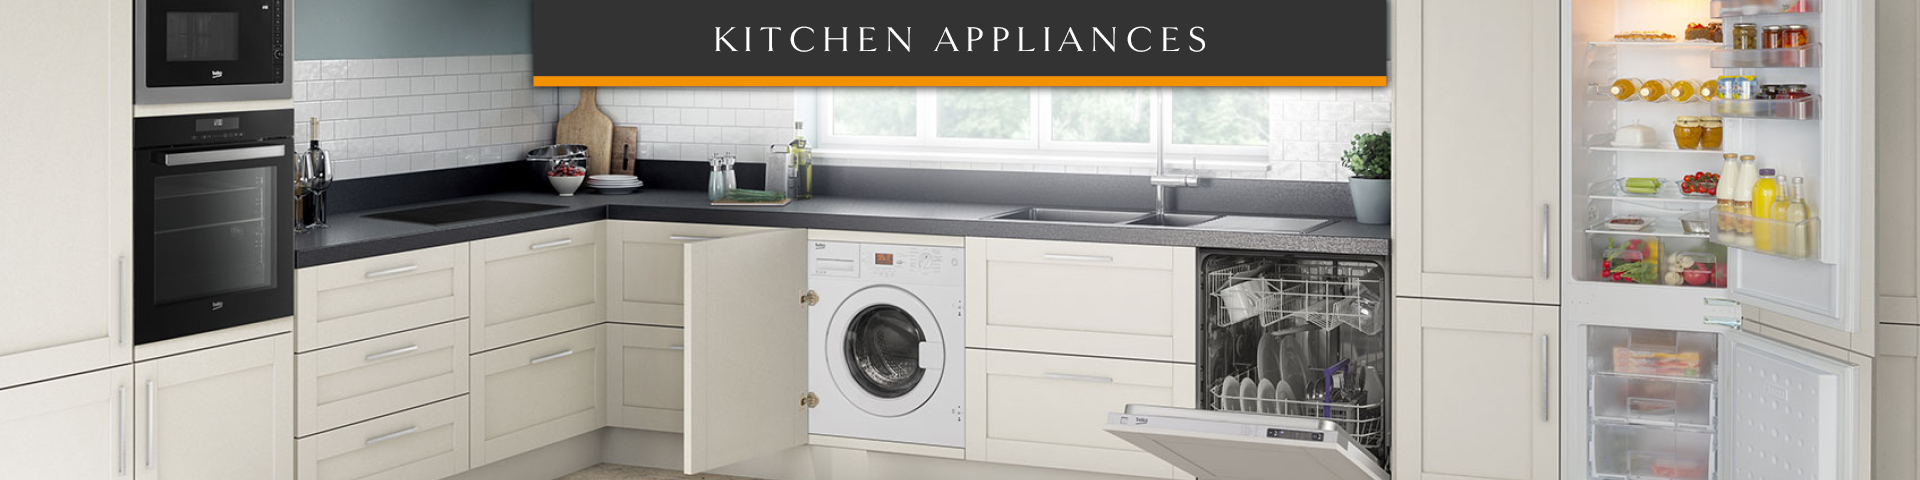 Kitchen Appliances Glasgow